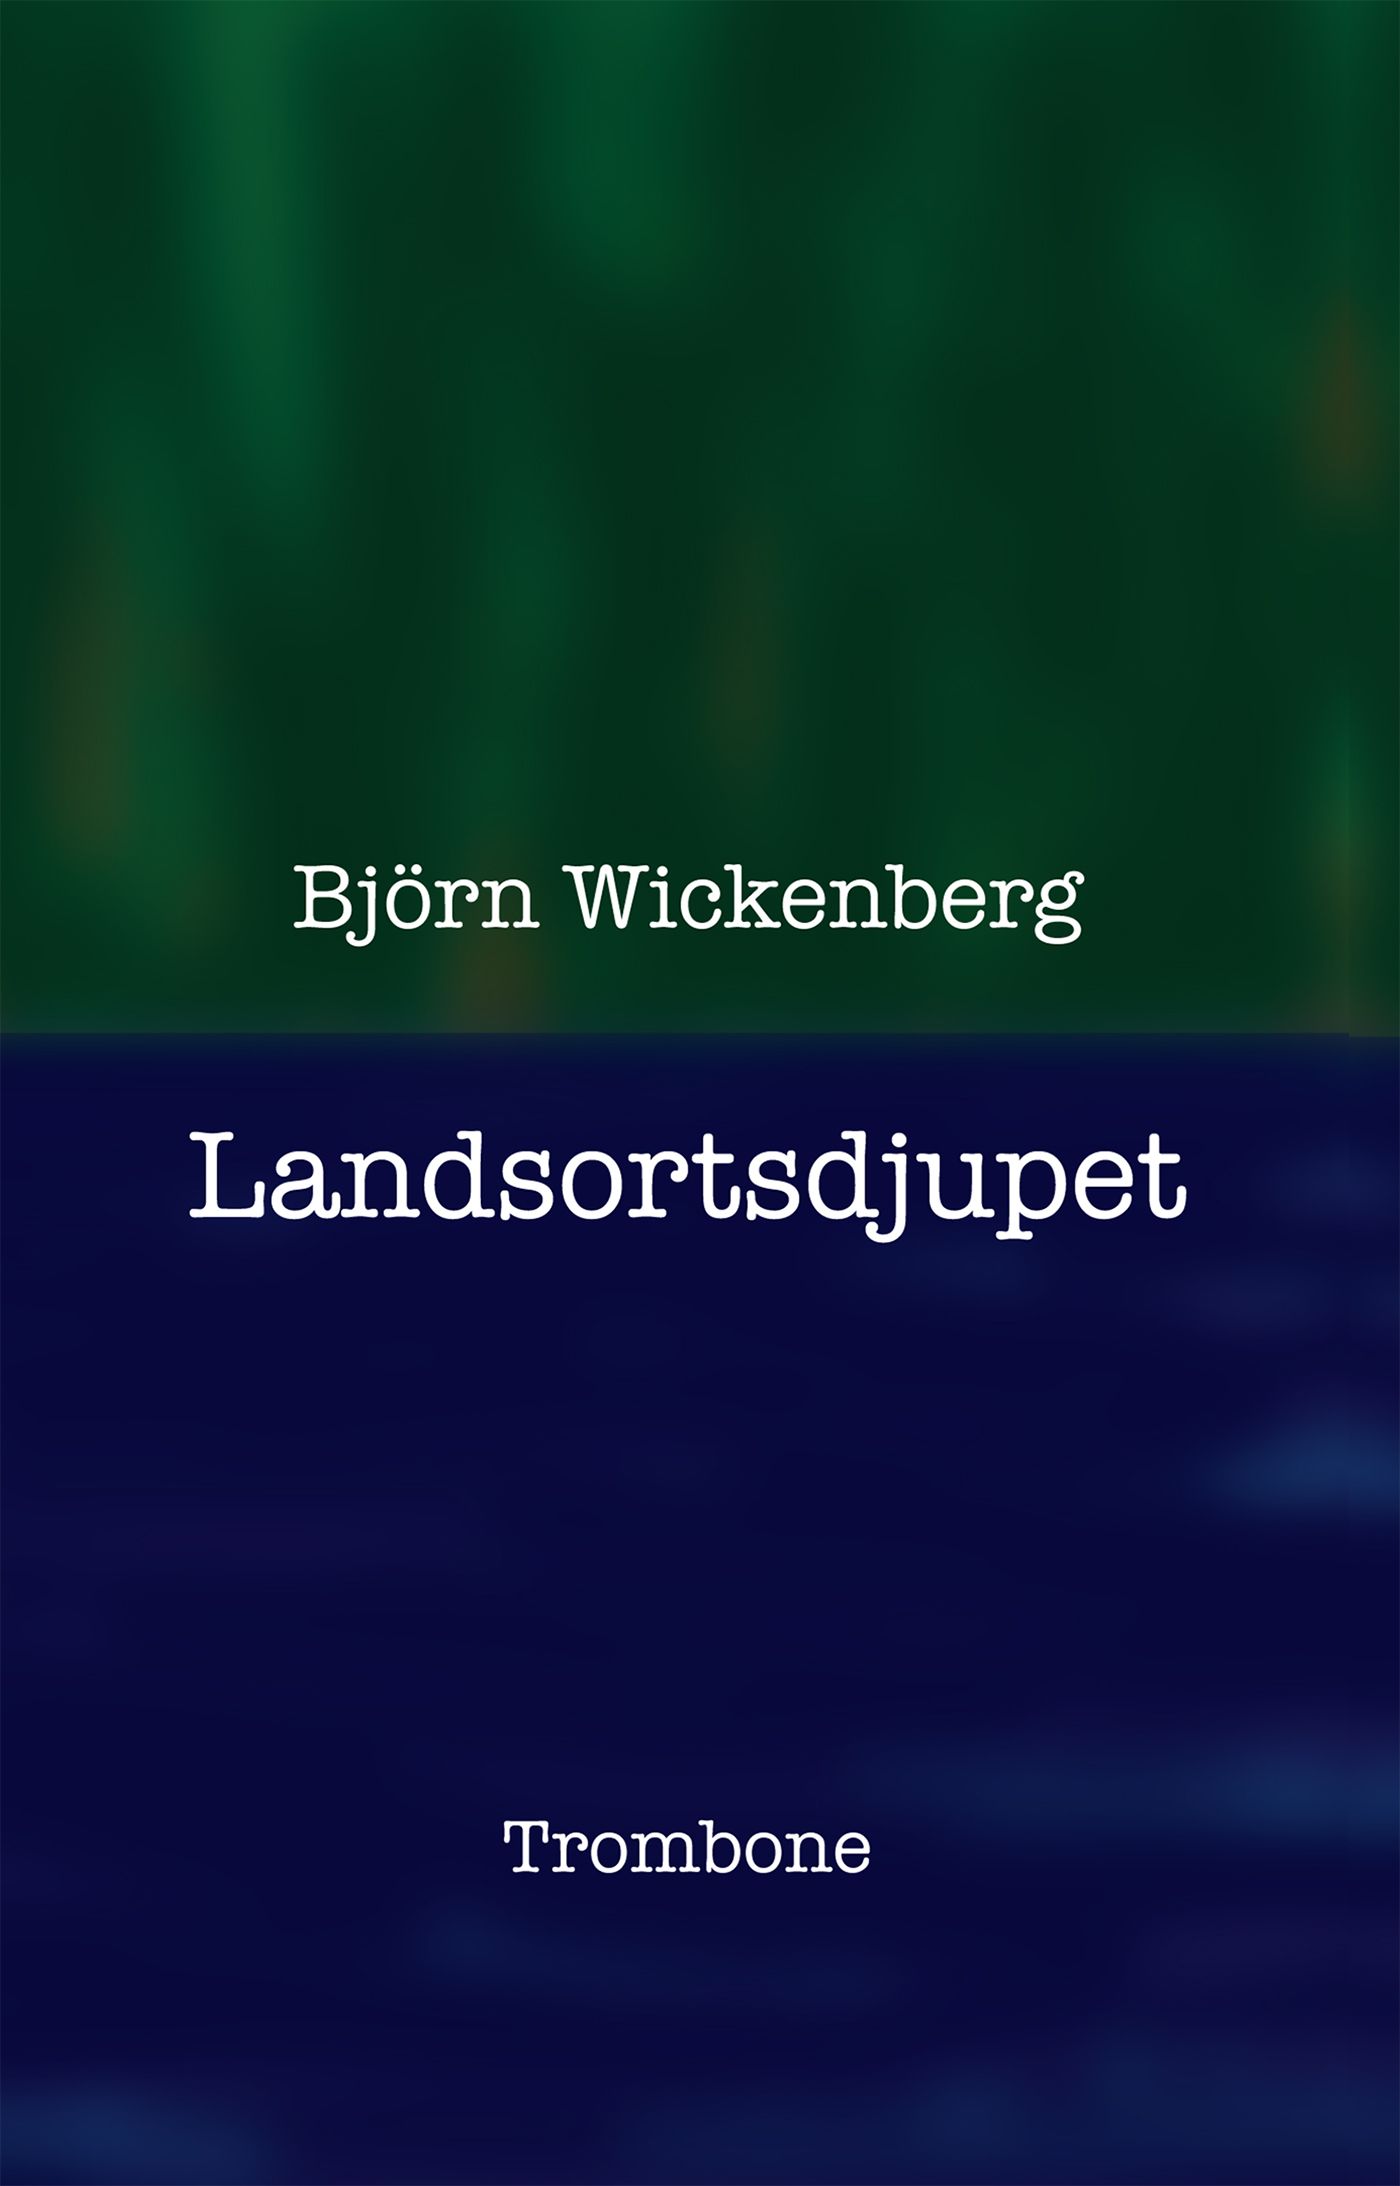 Landsortsdjupet, eBook by Björn Wickenberg